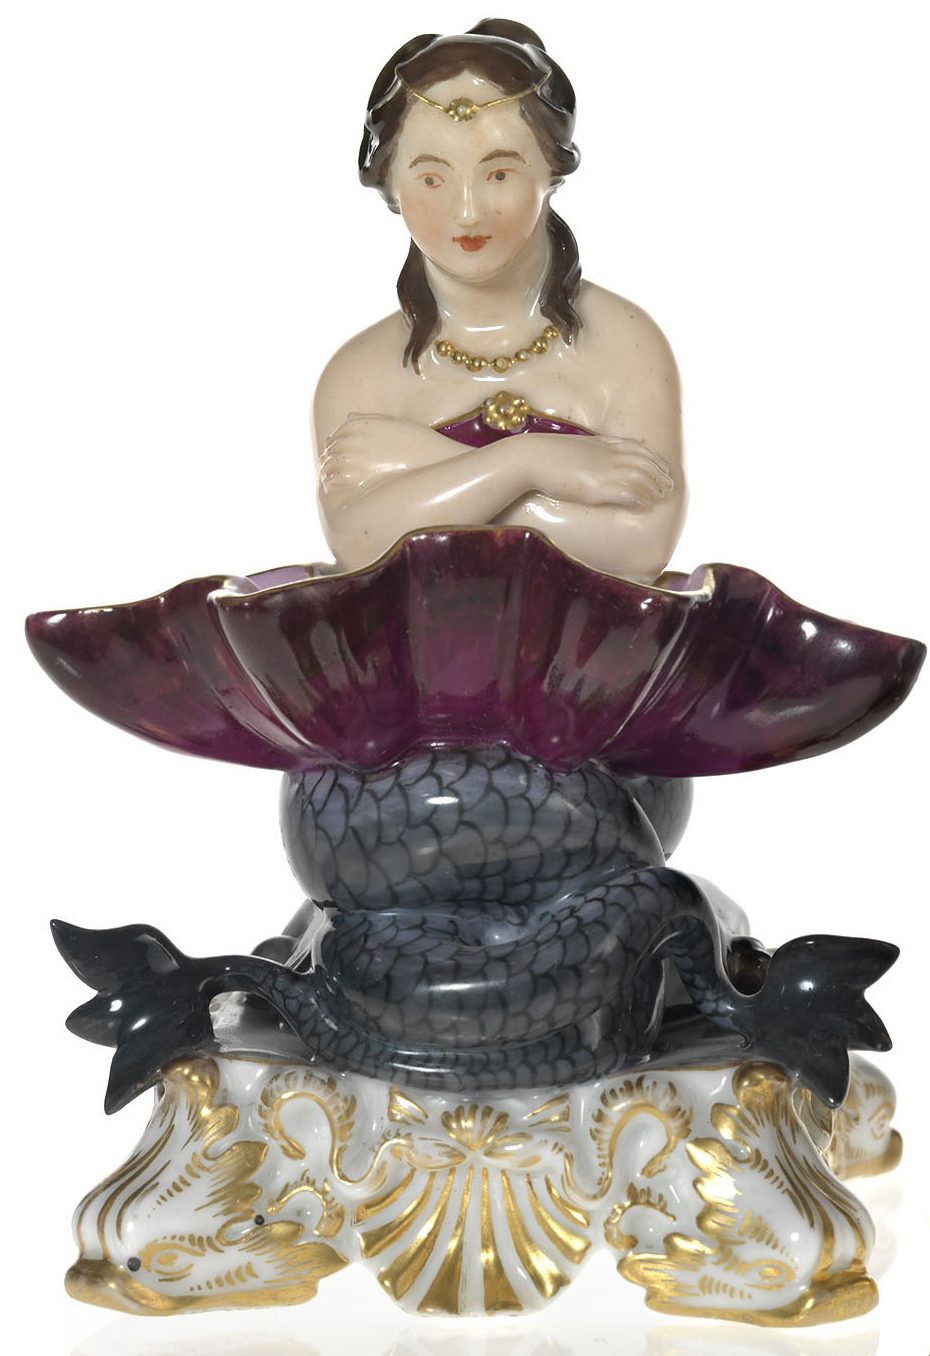 A Porcelain Figurine of a Naiad with a Seashell